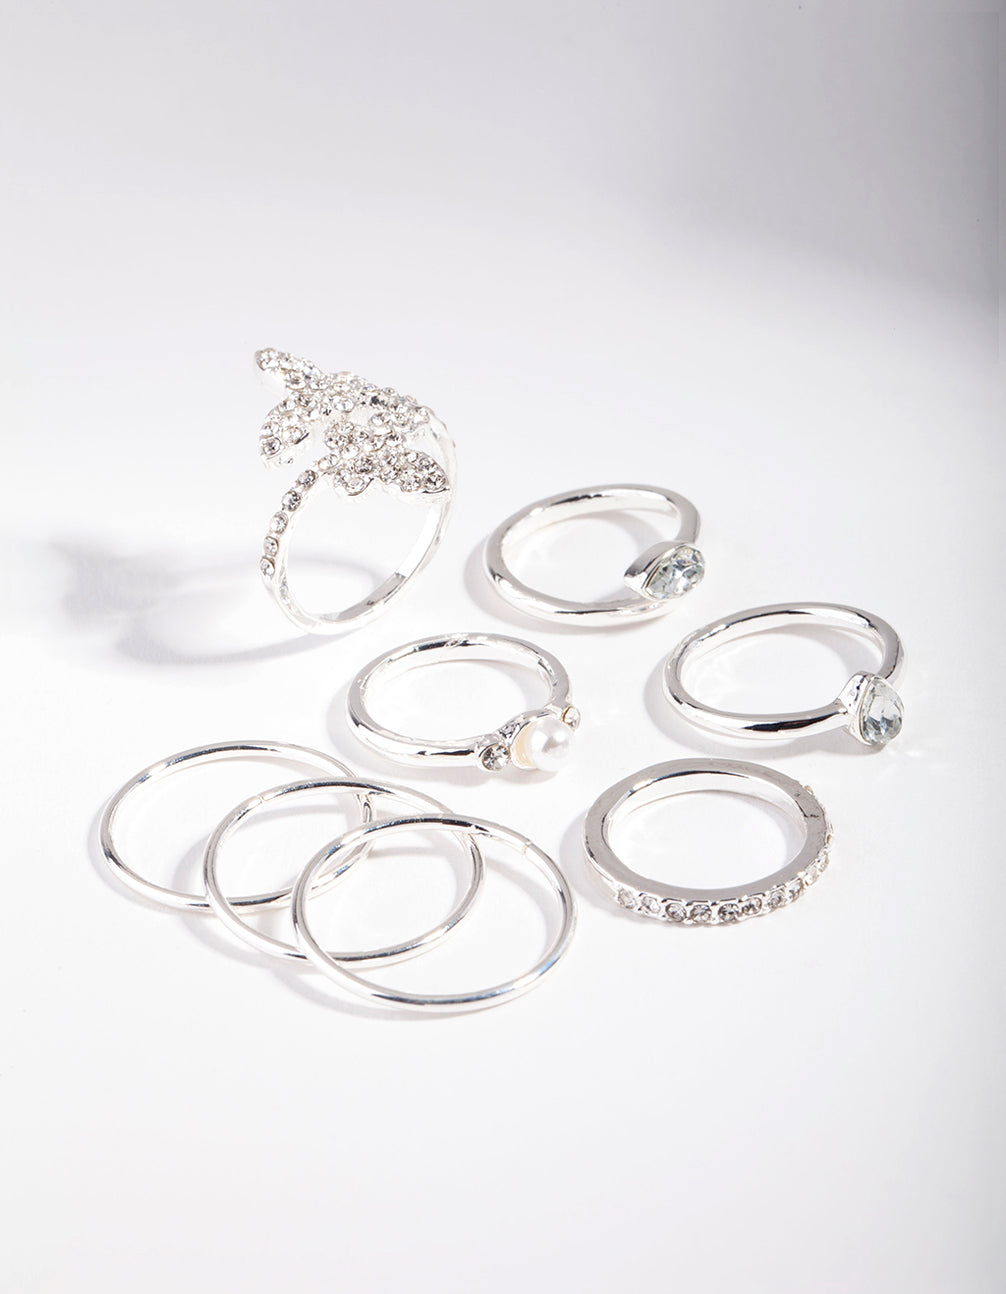 Rings for Women, Gold & Sterling Silver Rings